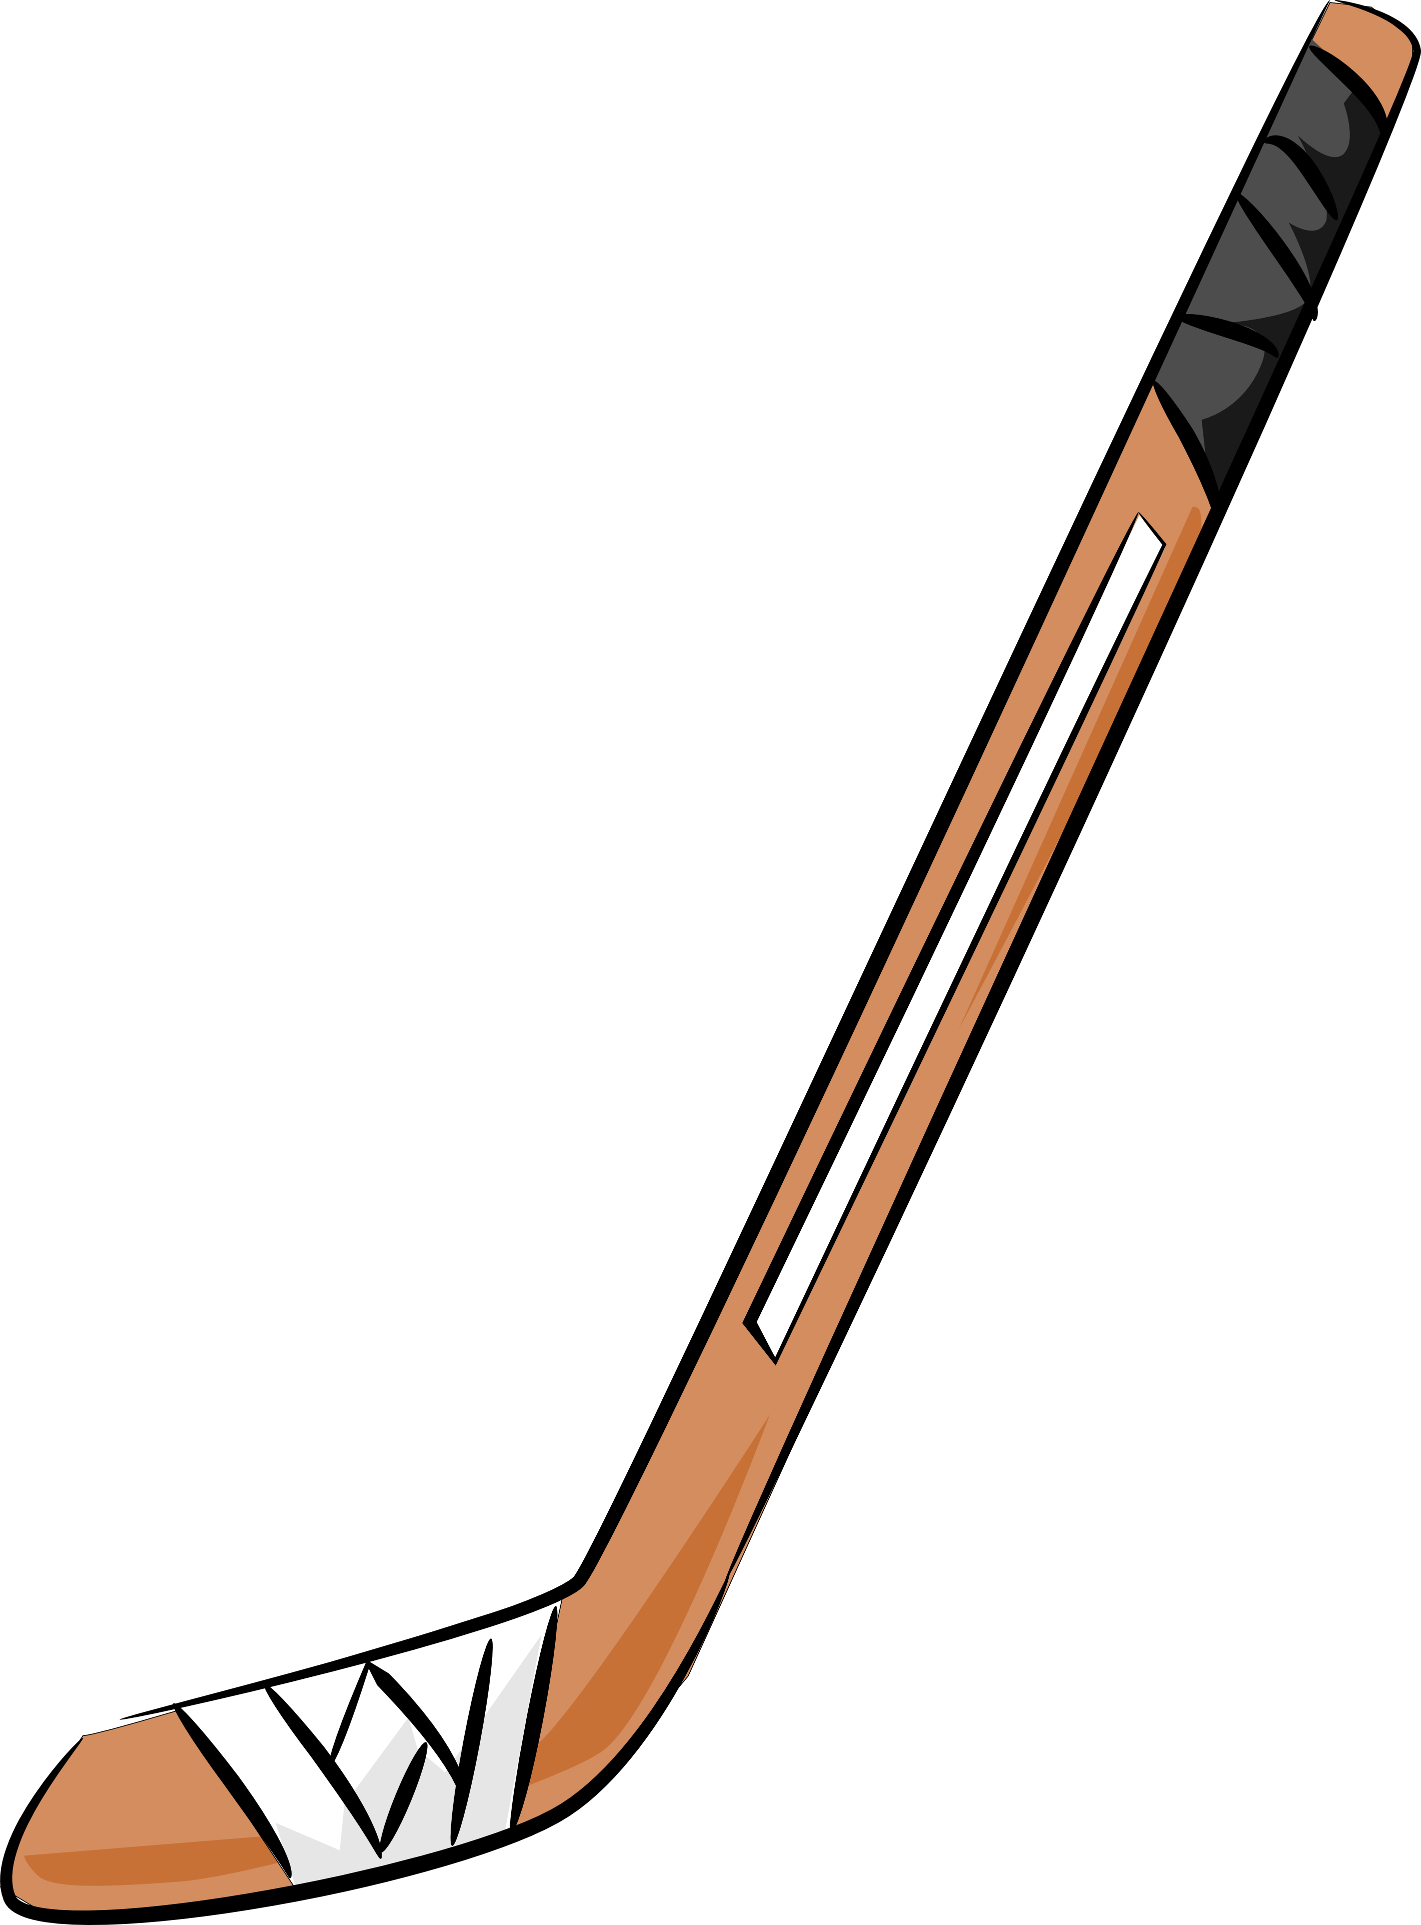 Hockey Stick Download Free Image PNG Image